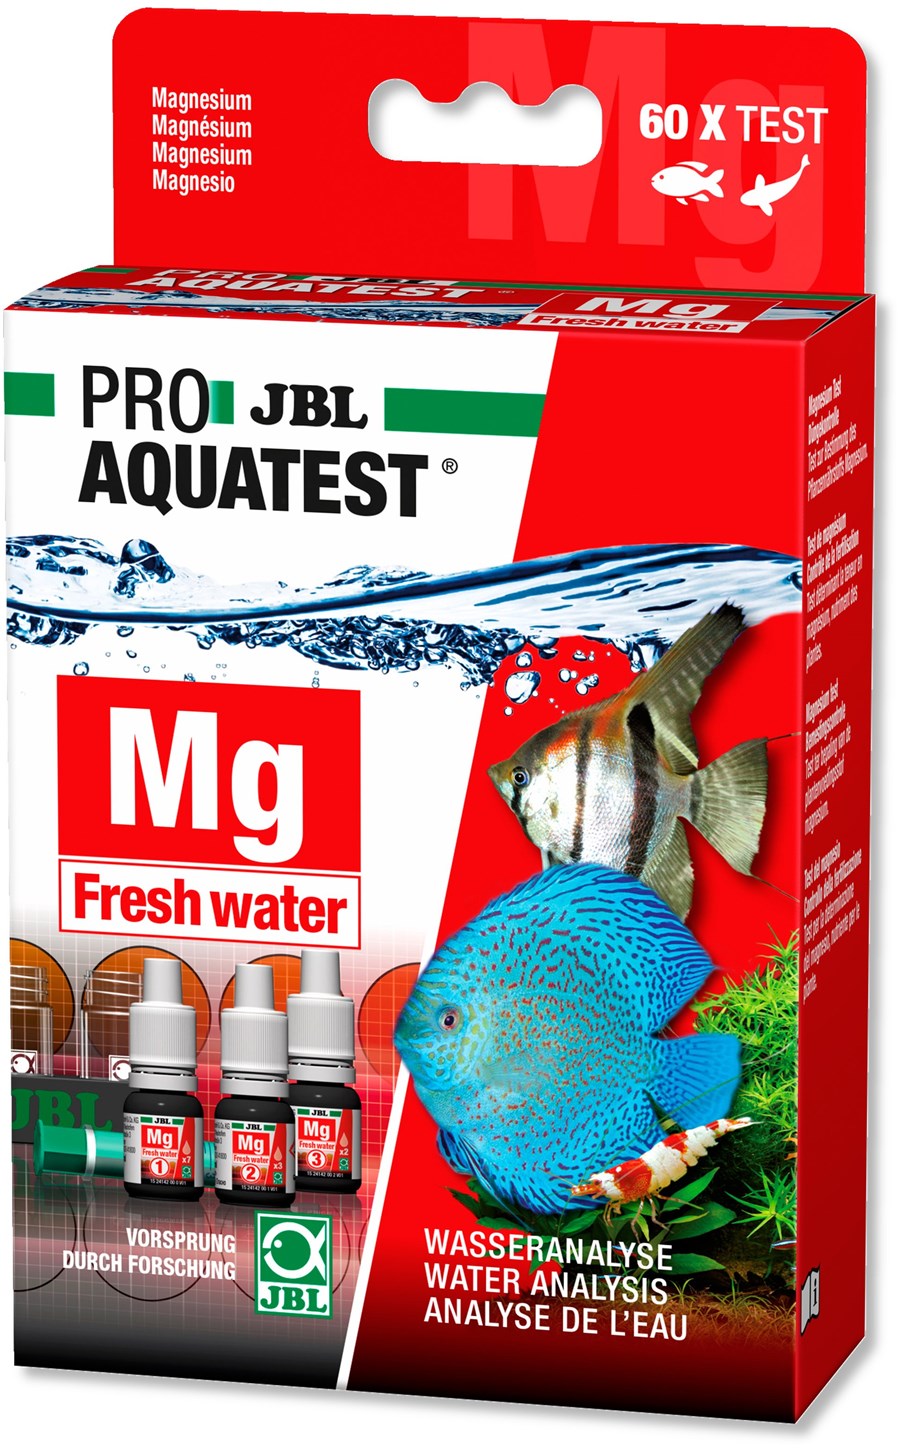 JBL PROAQUATEST MG Magnésium (eau douce)